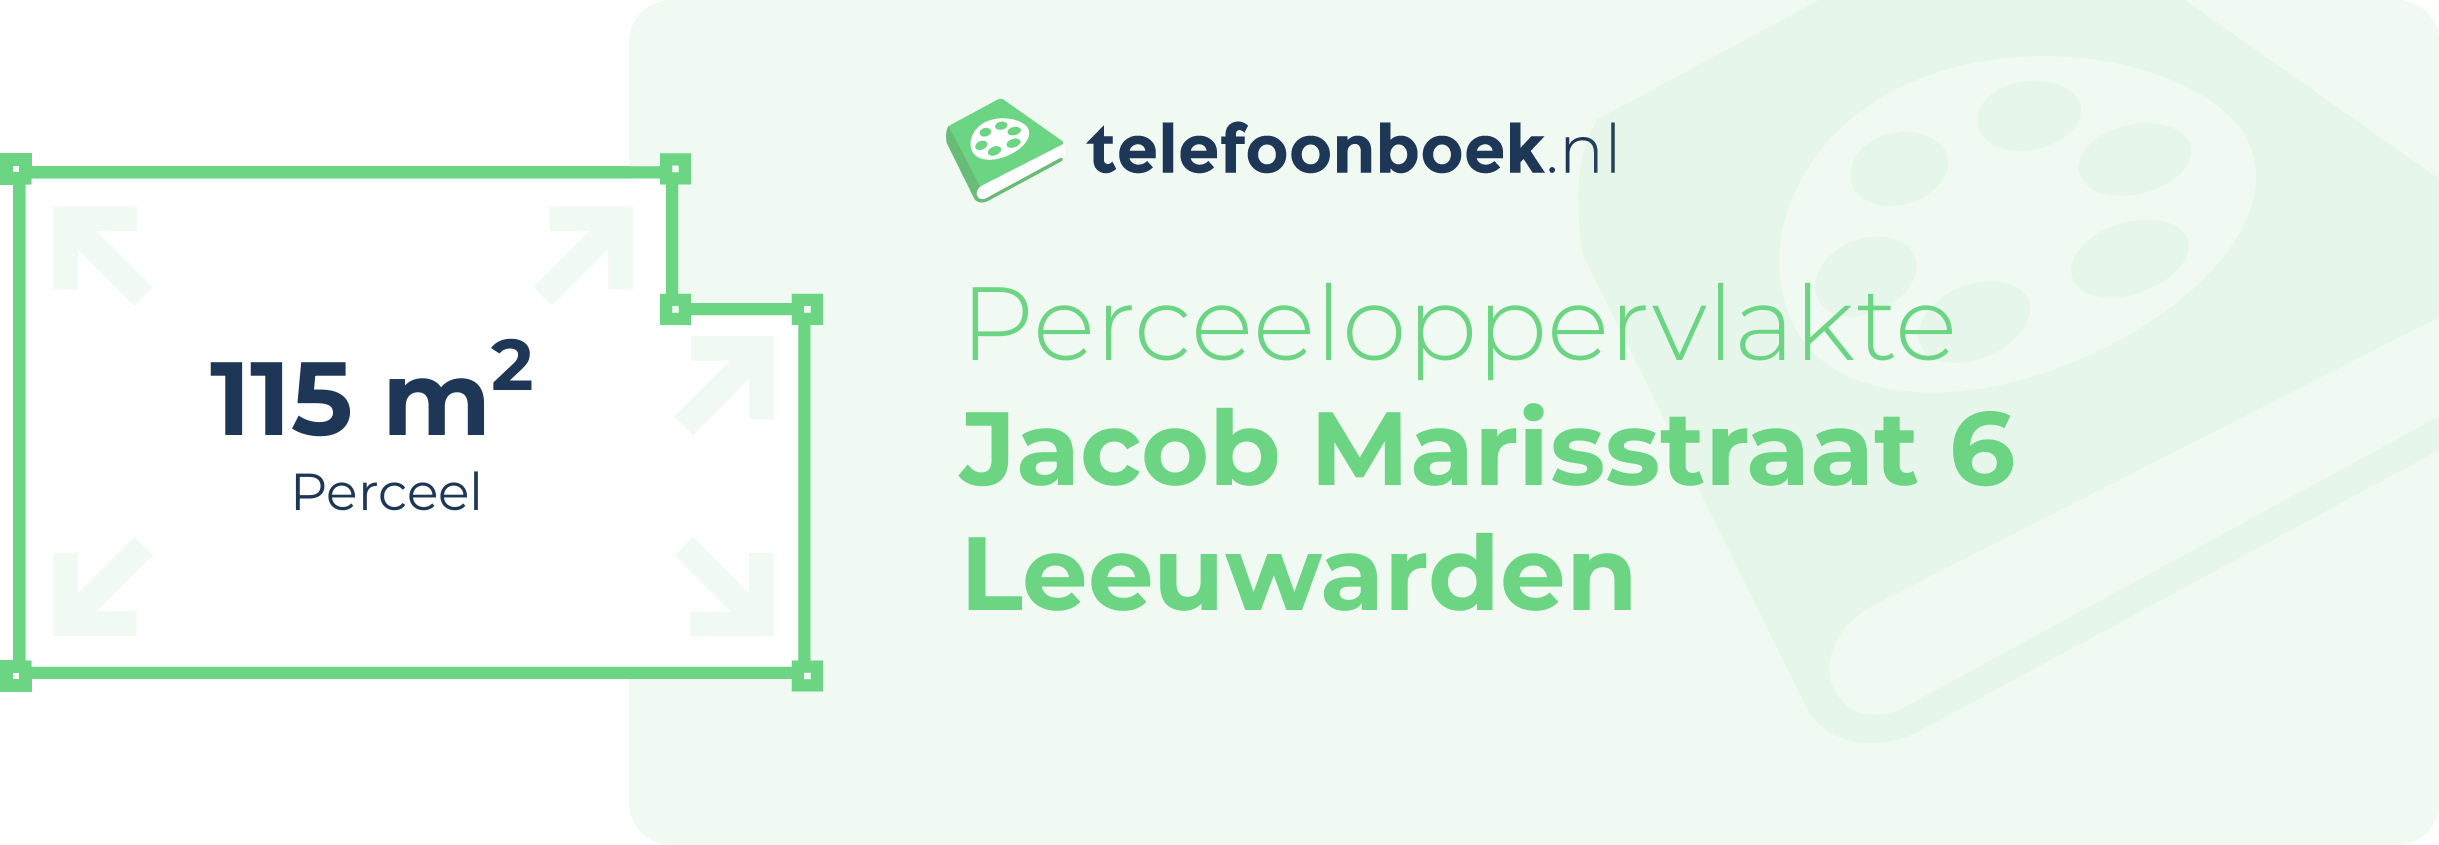 Perceeloppervlakte Jacob Marisstraat 6 Leeuwarden